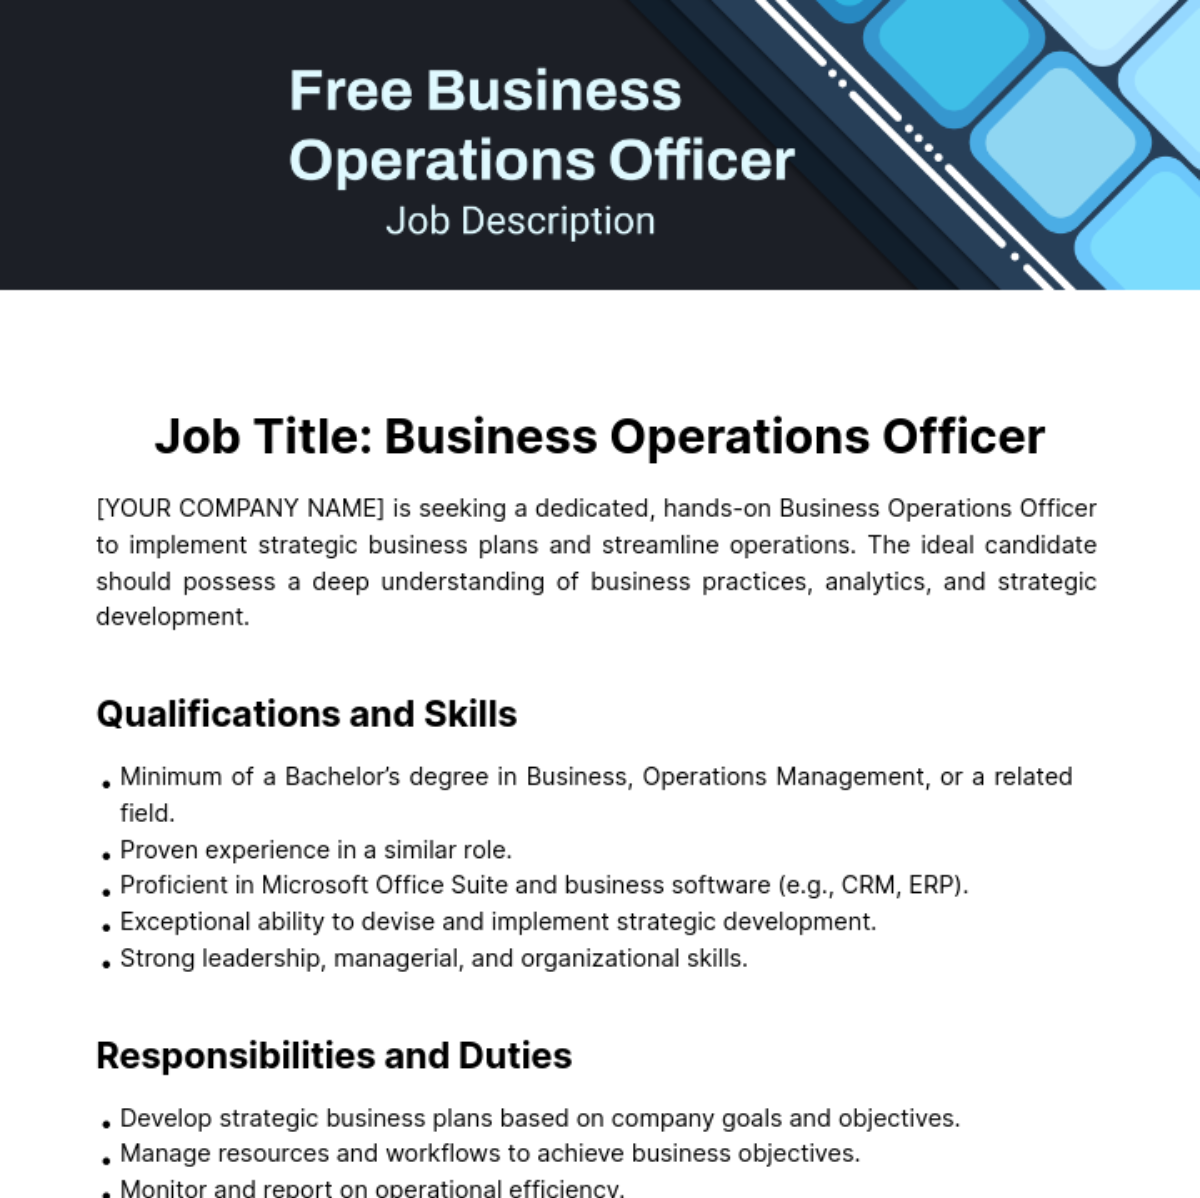 Free Business Operations Officer Job Description Template